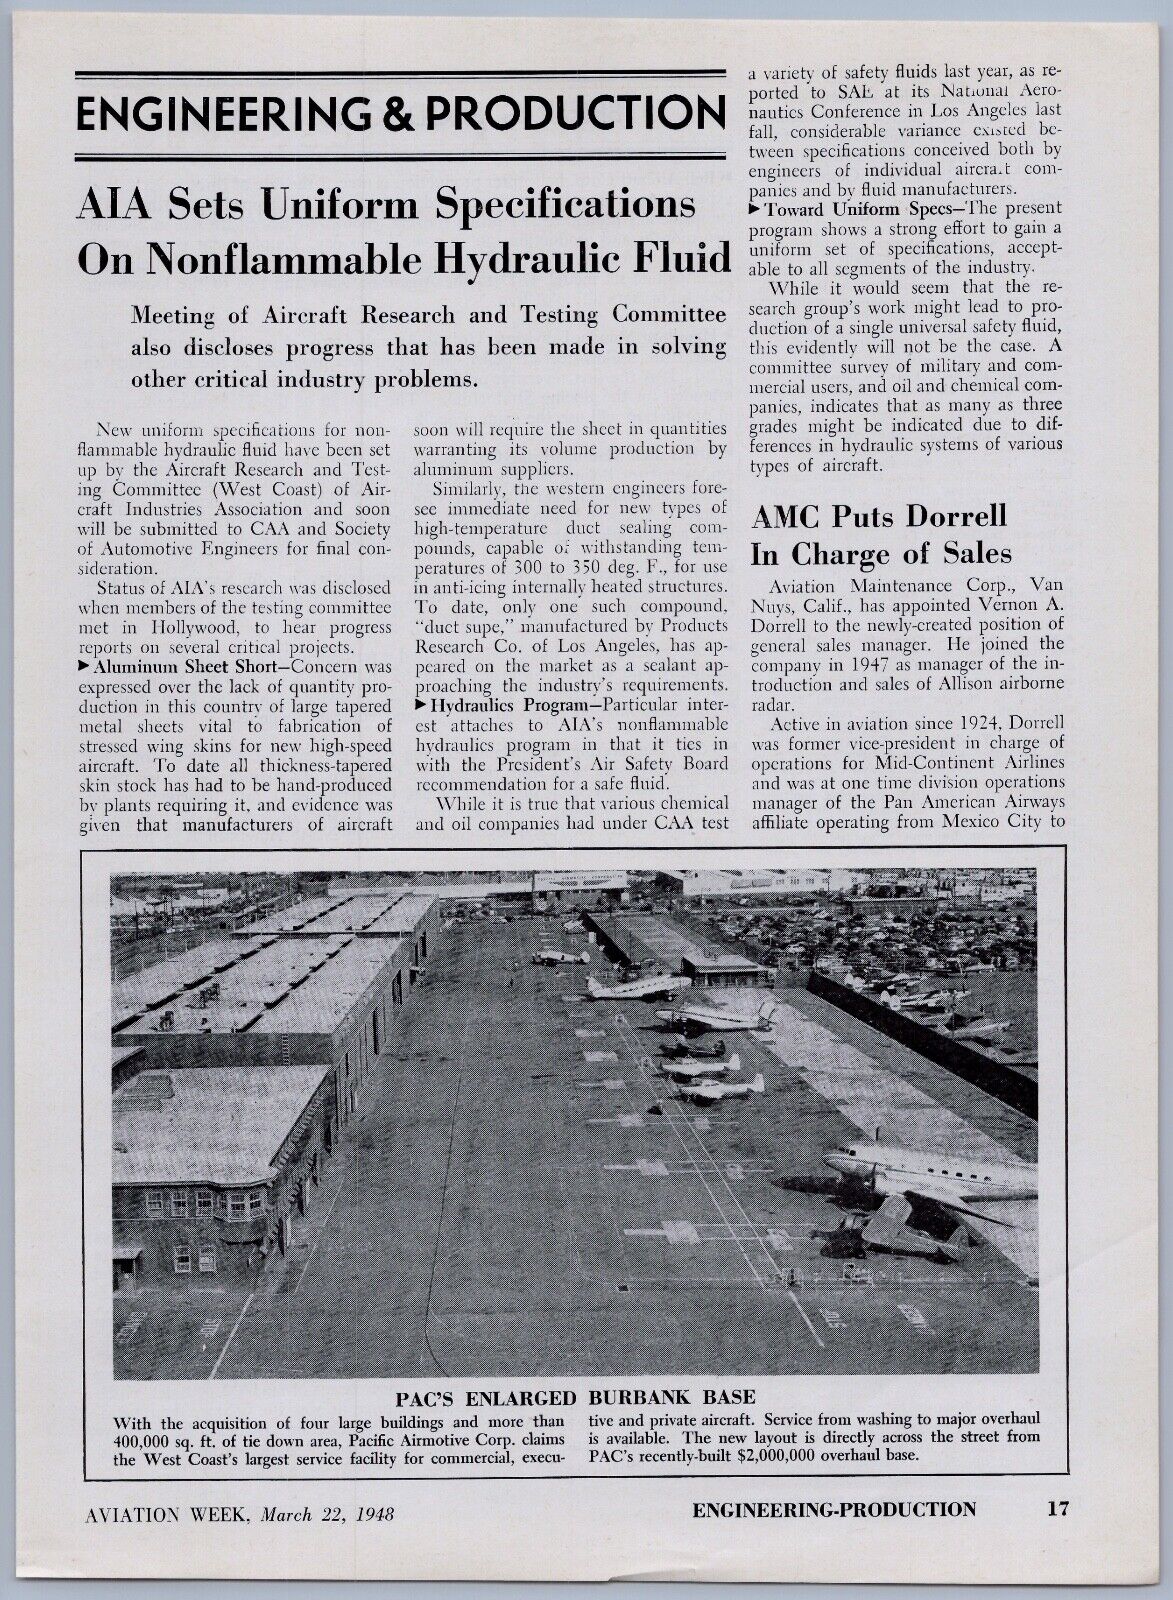 1948 Aviation Article - Pacific Airmotive Burbank California Service Facilities